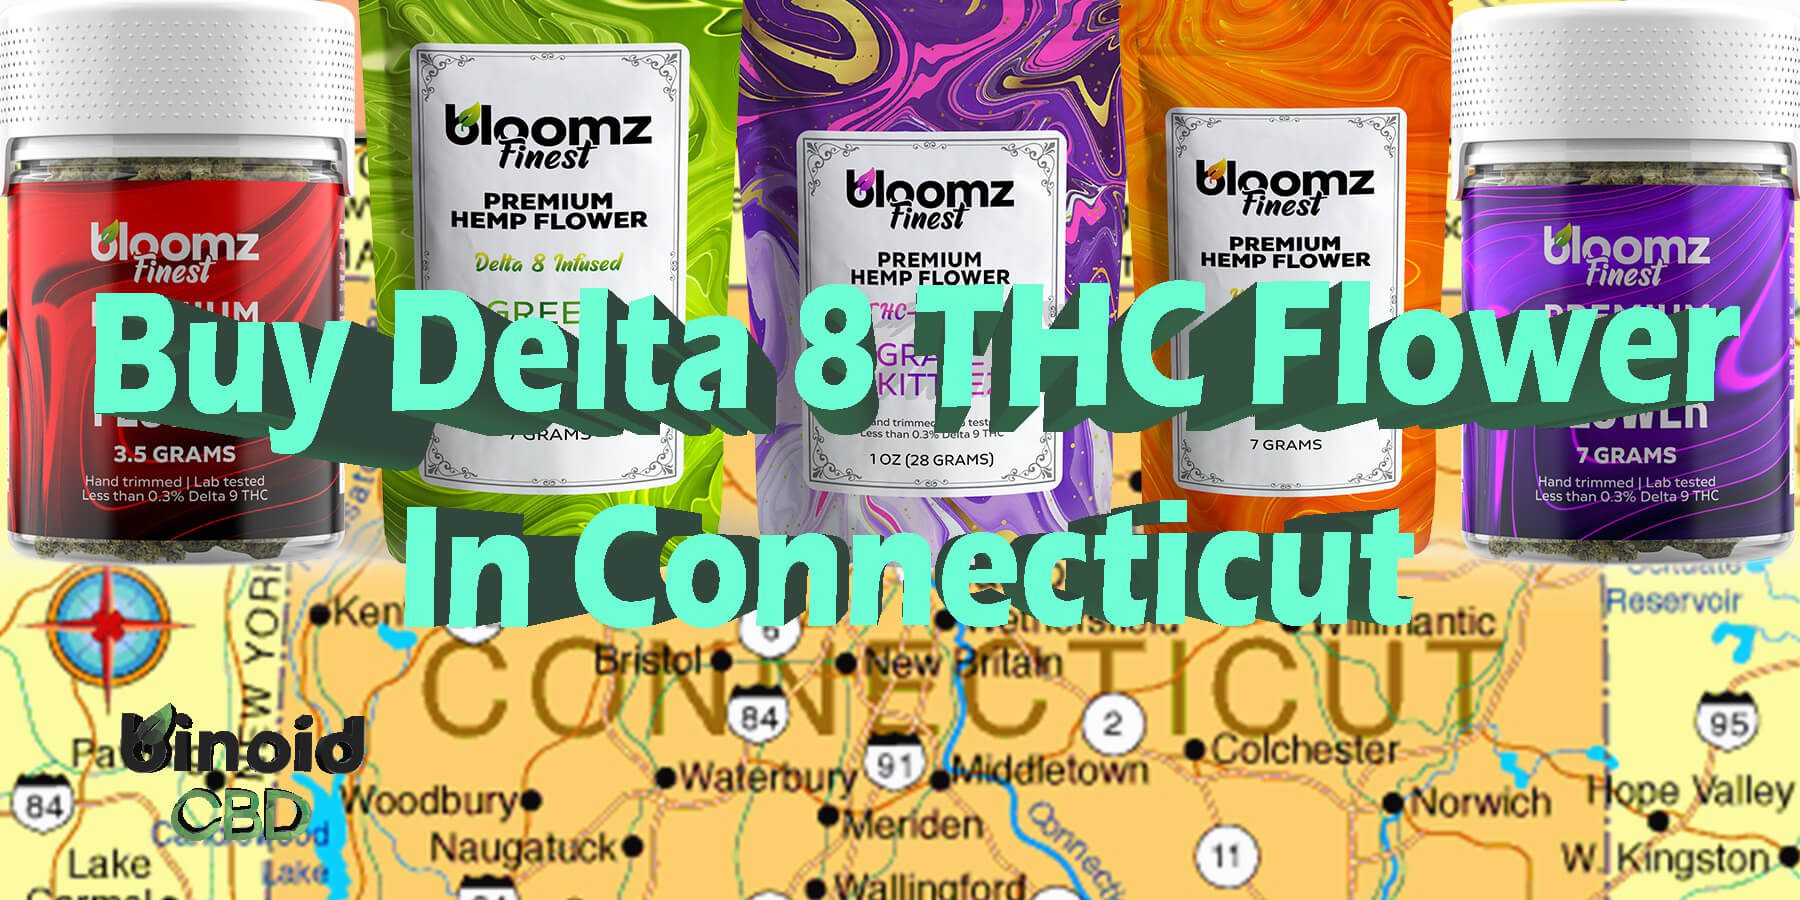 Buy Delta 8 THC Hemp Flower Connecticut Get Near Me Best Price Place To Get Strongest Brand Reddit